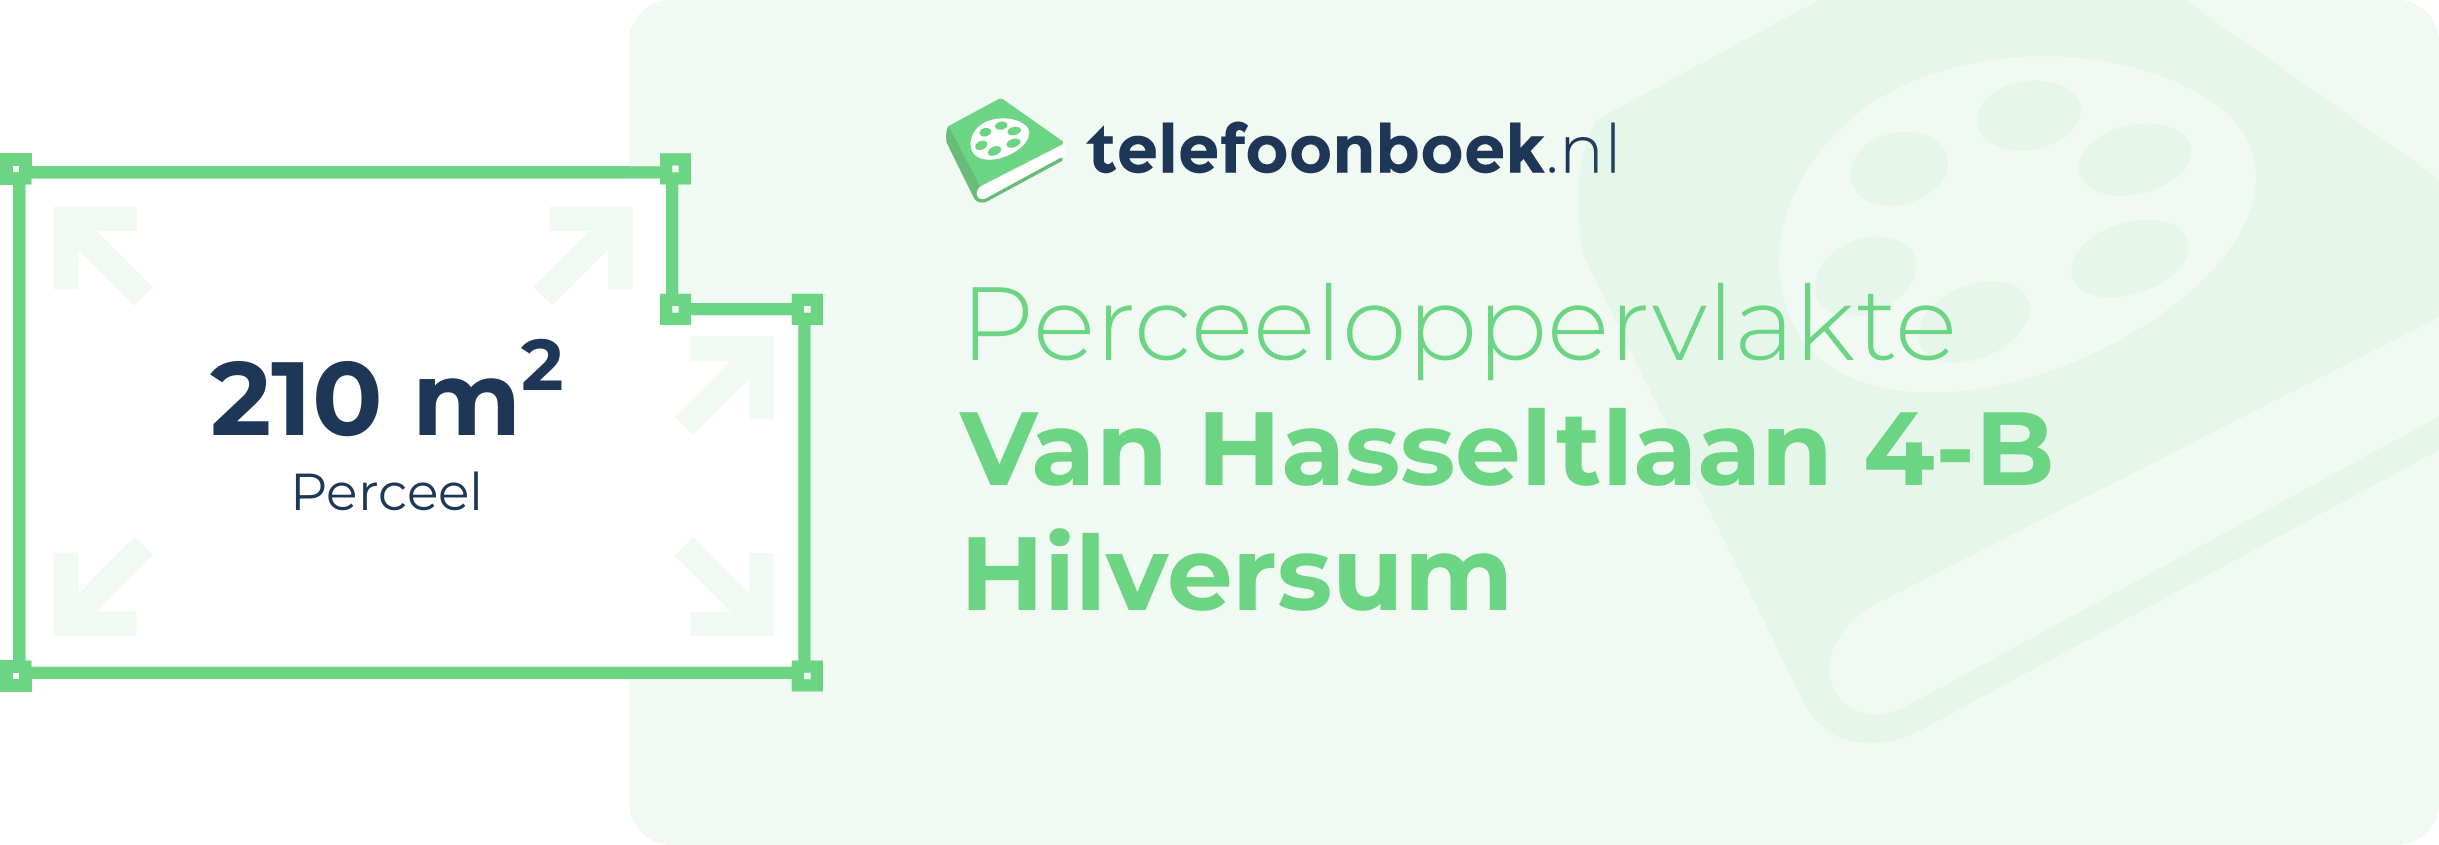 Perceeloppervlakte Van Hasseltlaan 4-B Hilversum